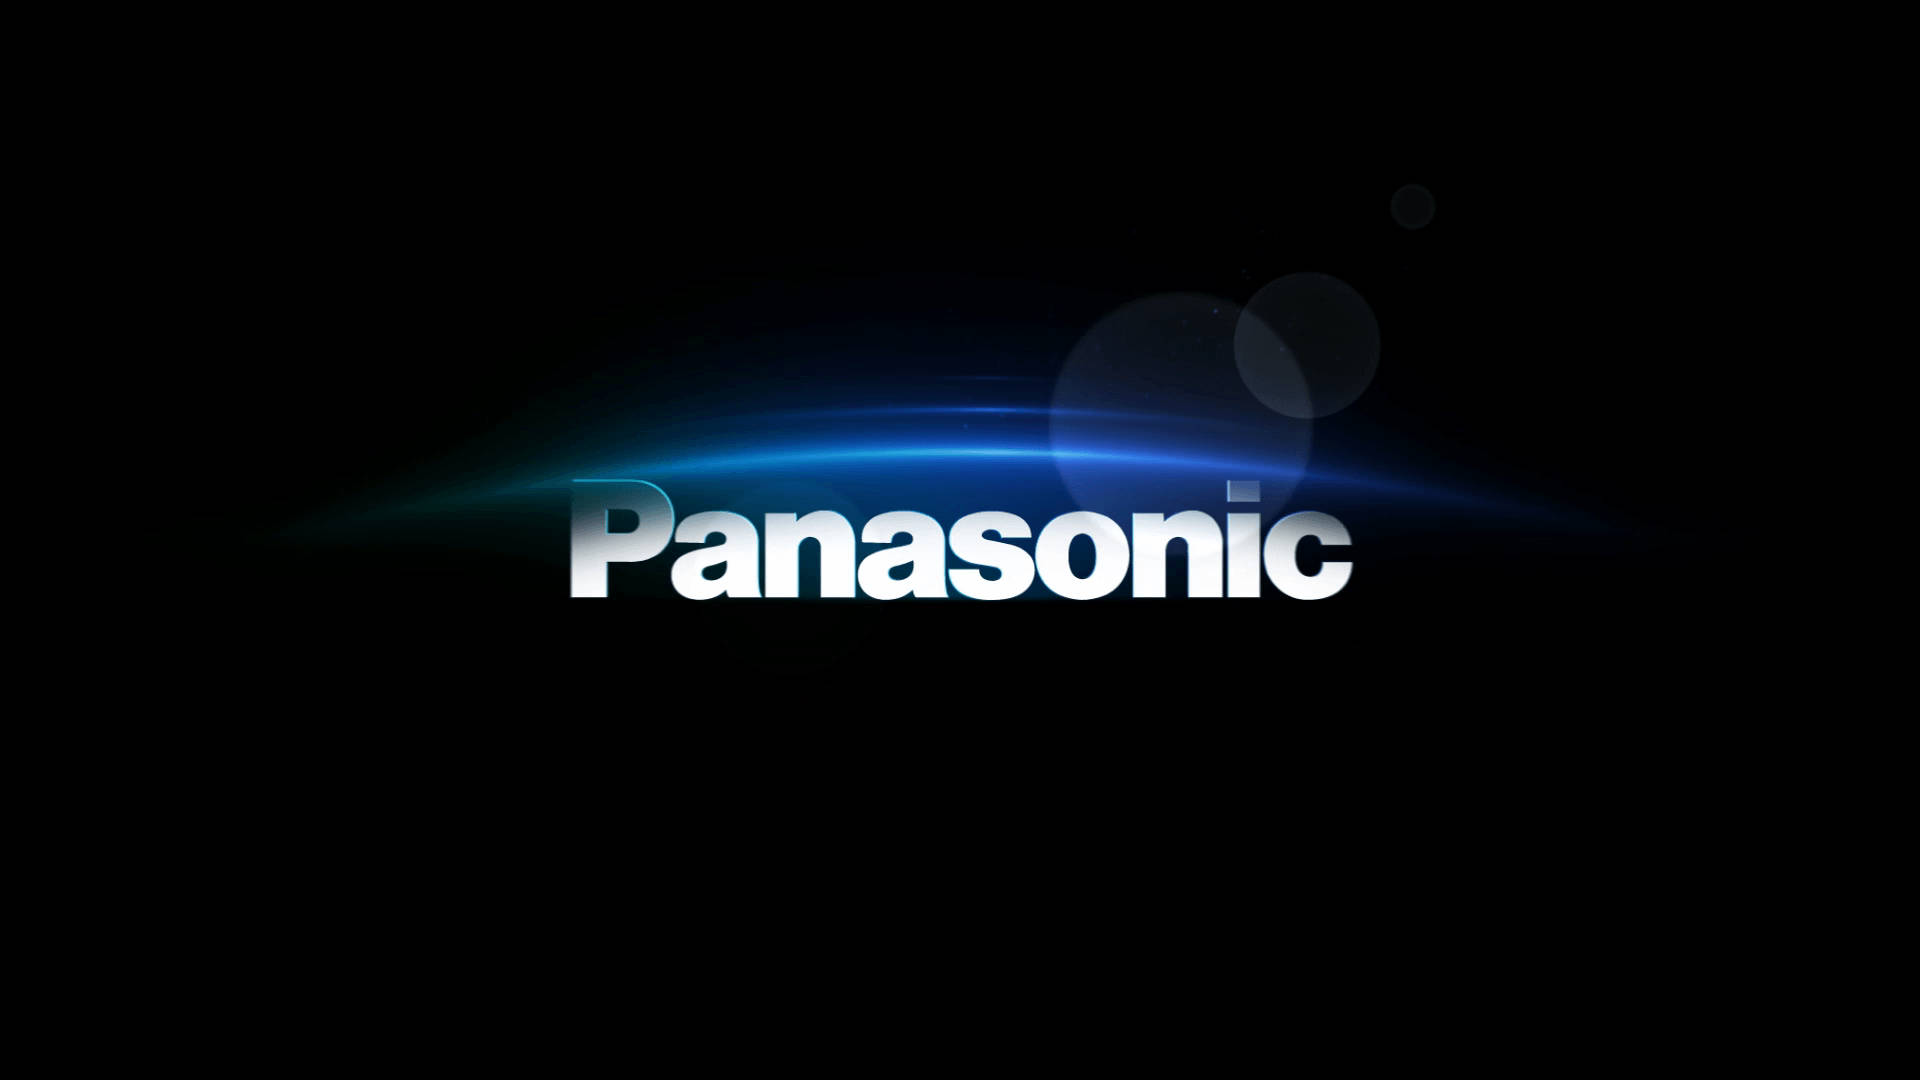 Panasonic Blue And Black Wallpaper